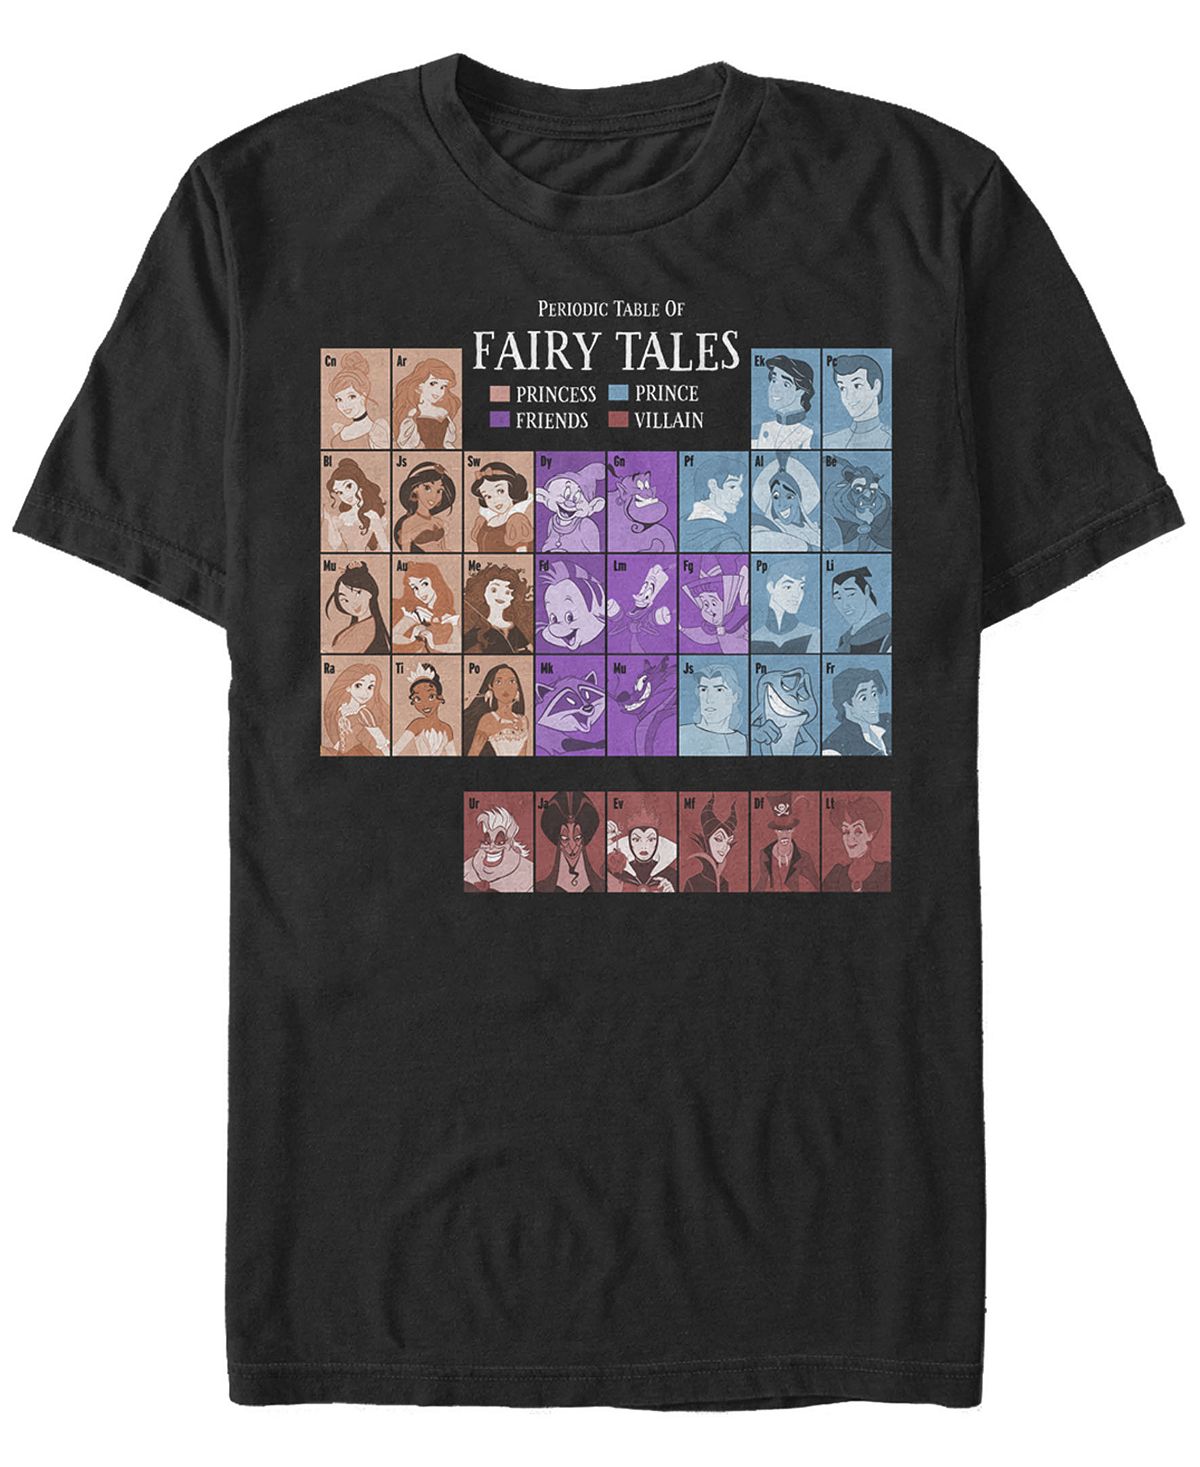 Мужская футболка с короткими рукавами princess periodic table of fairy tales Fifth Sun, черный